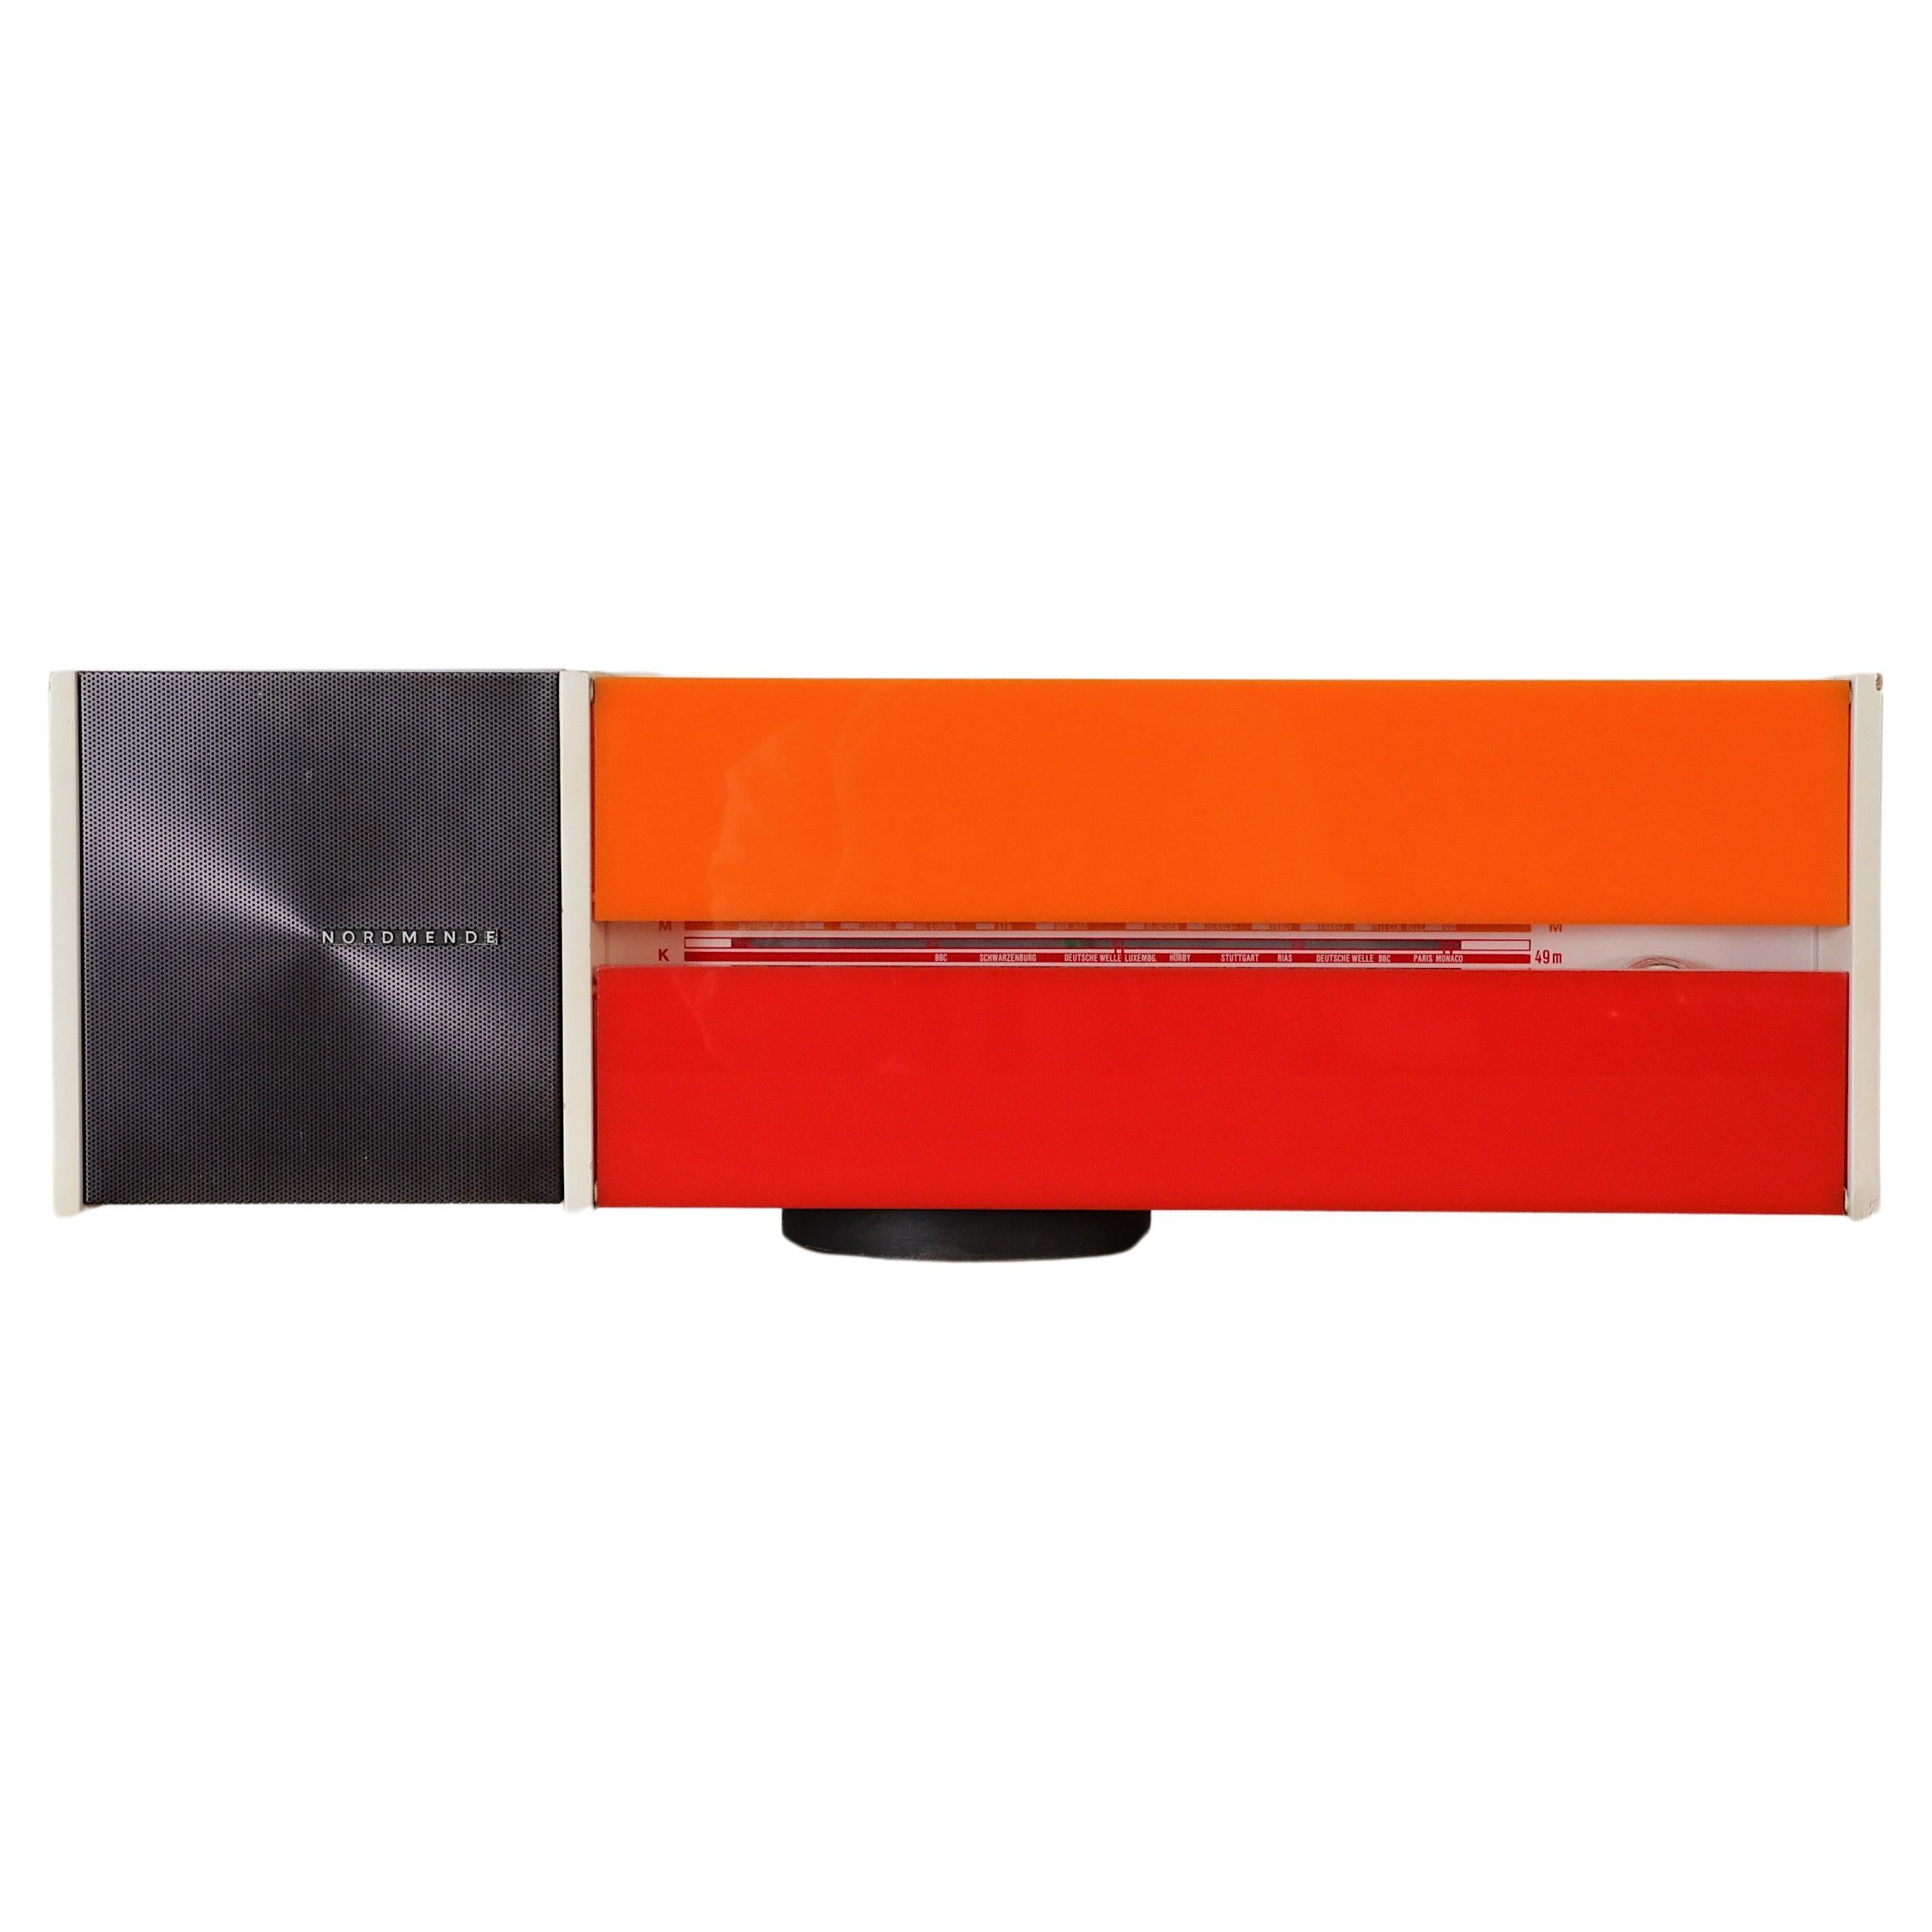 Raymond Loewy entworfenes Nordmende Spectra Futura Transistor Radio in Rot & Orange